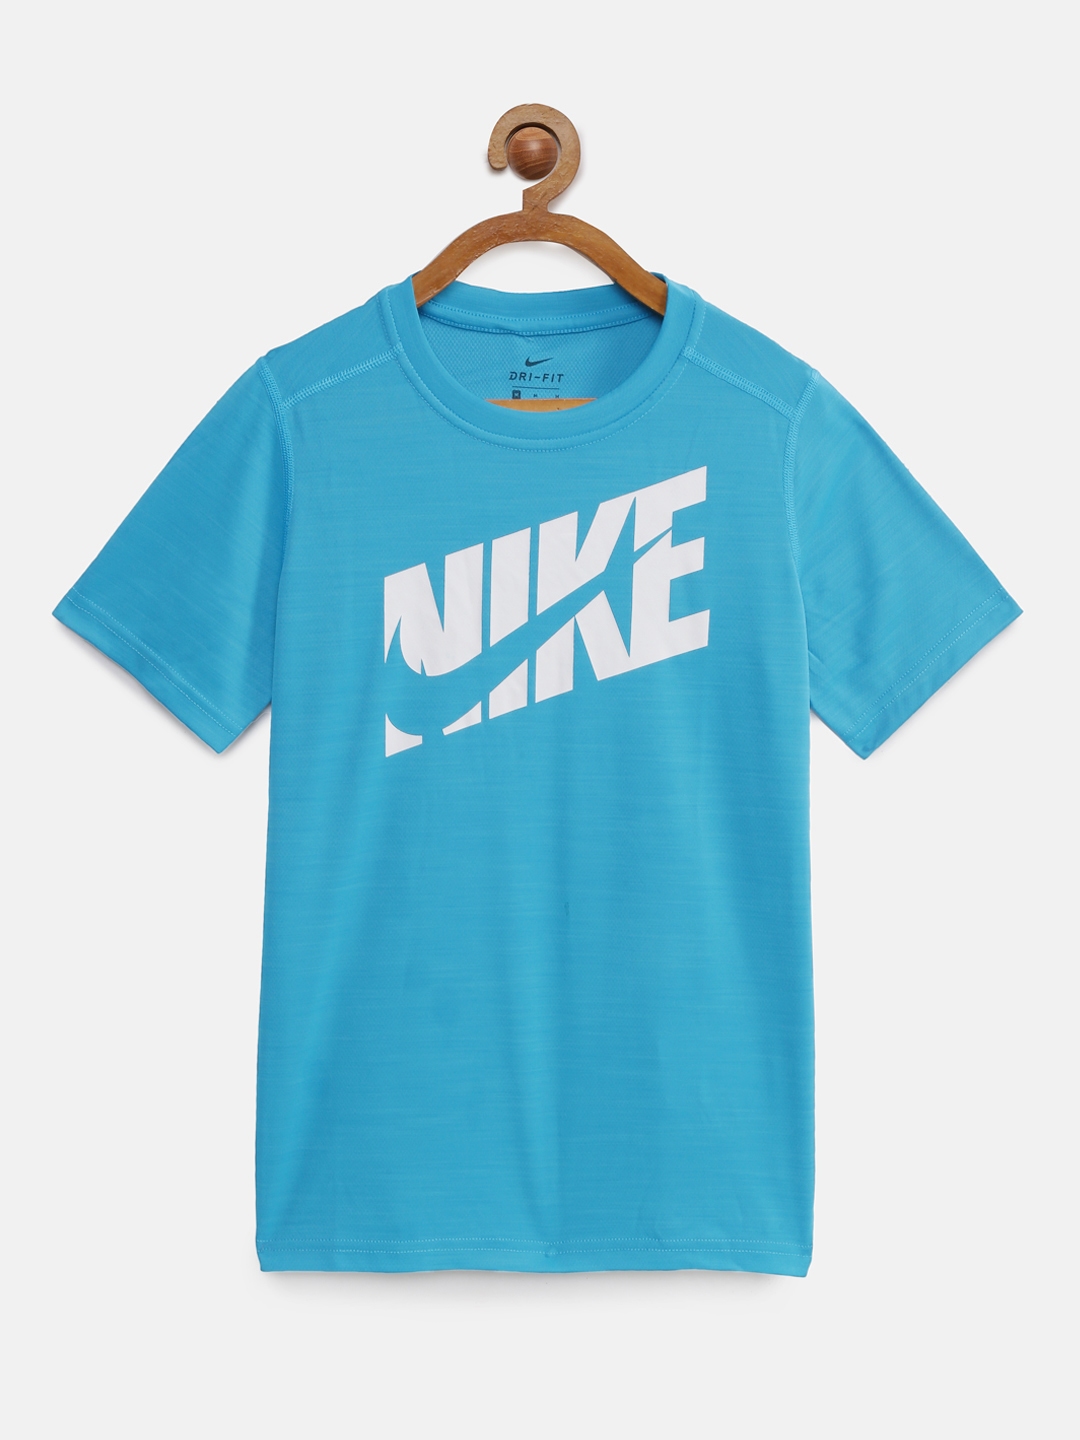 Buy Nike Boys Blue Printed Round Neck HBR+ PERF TOP SS Dri FIT Training ...